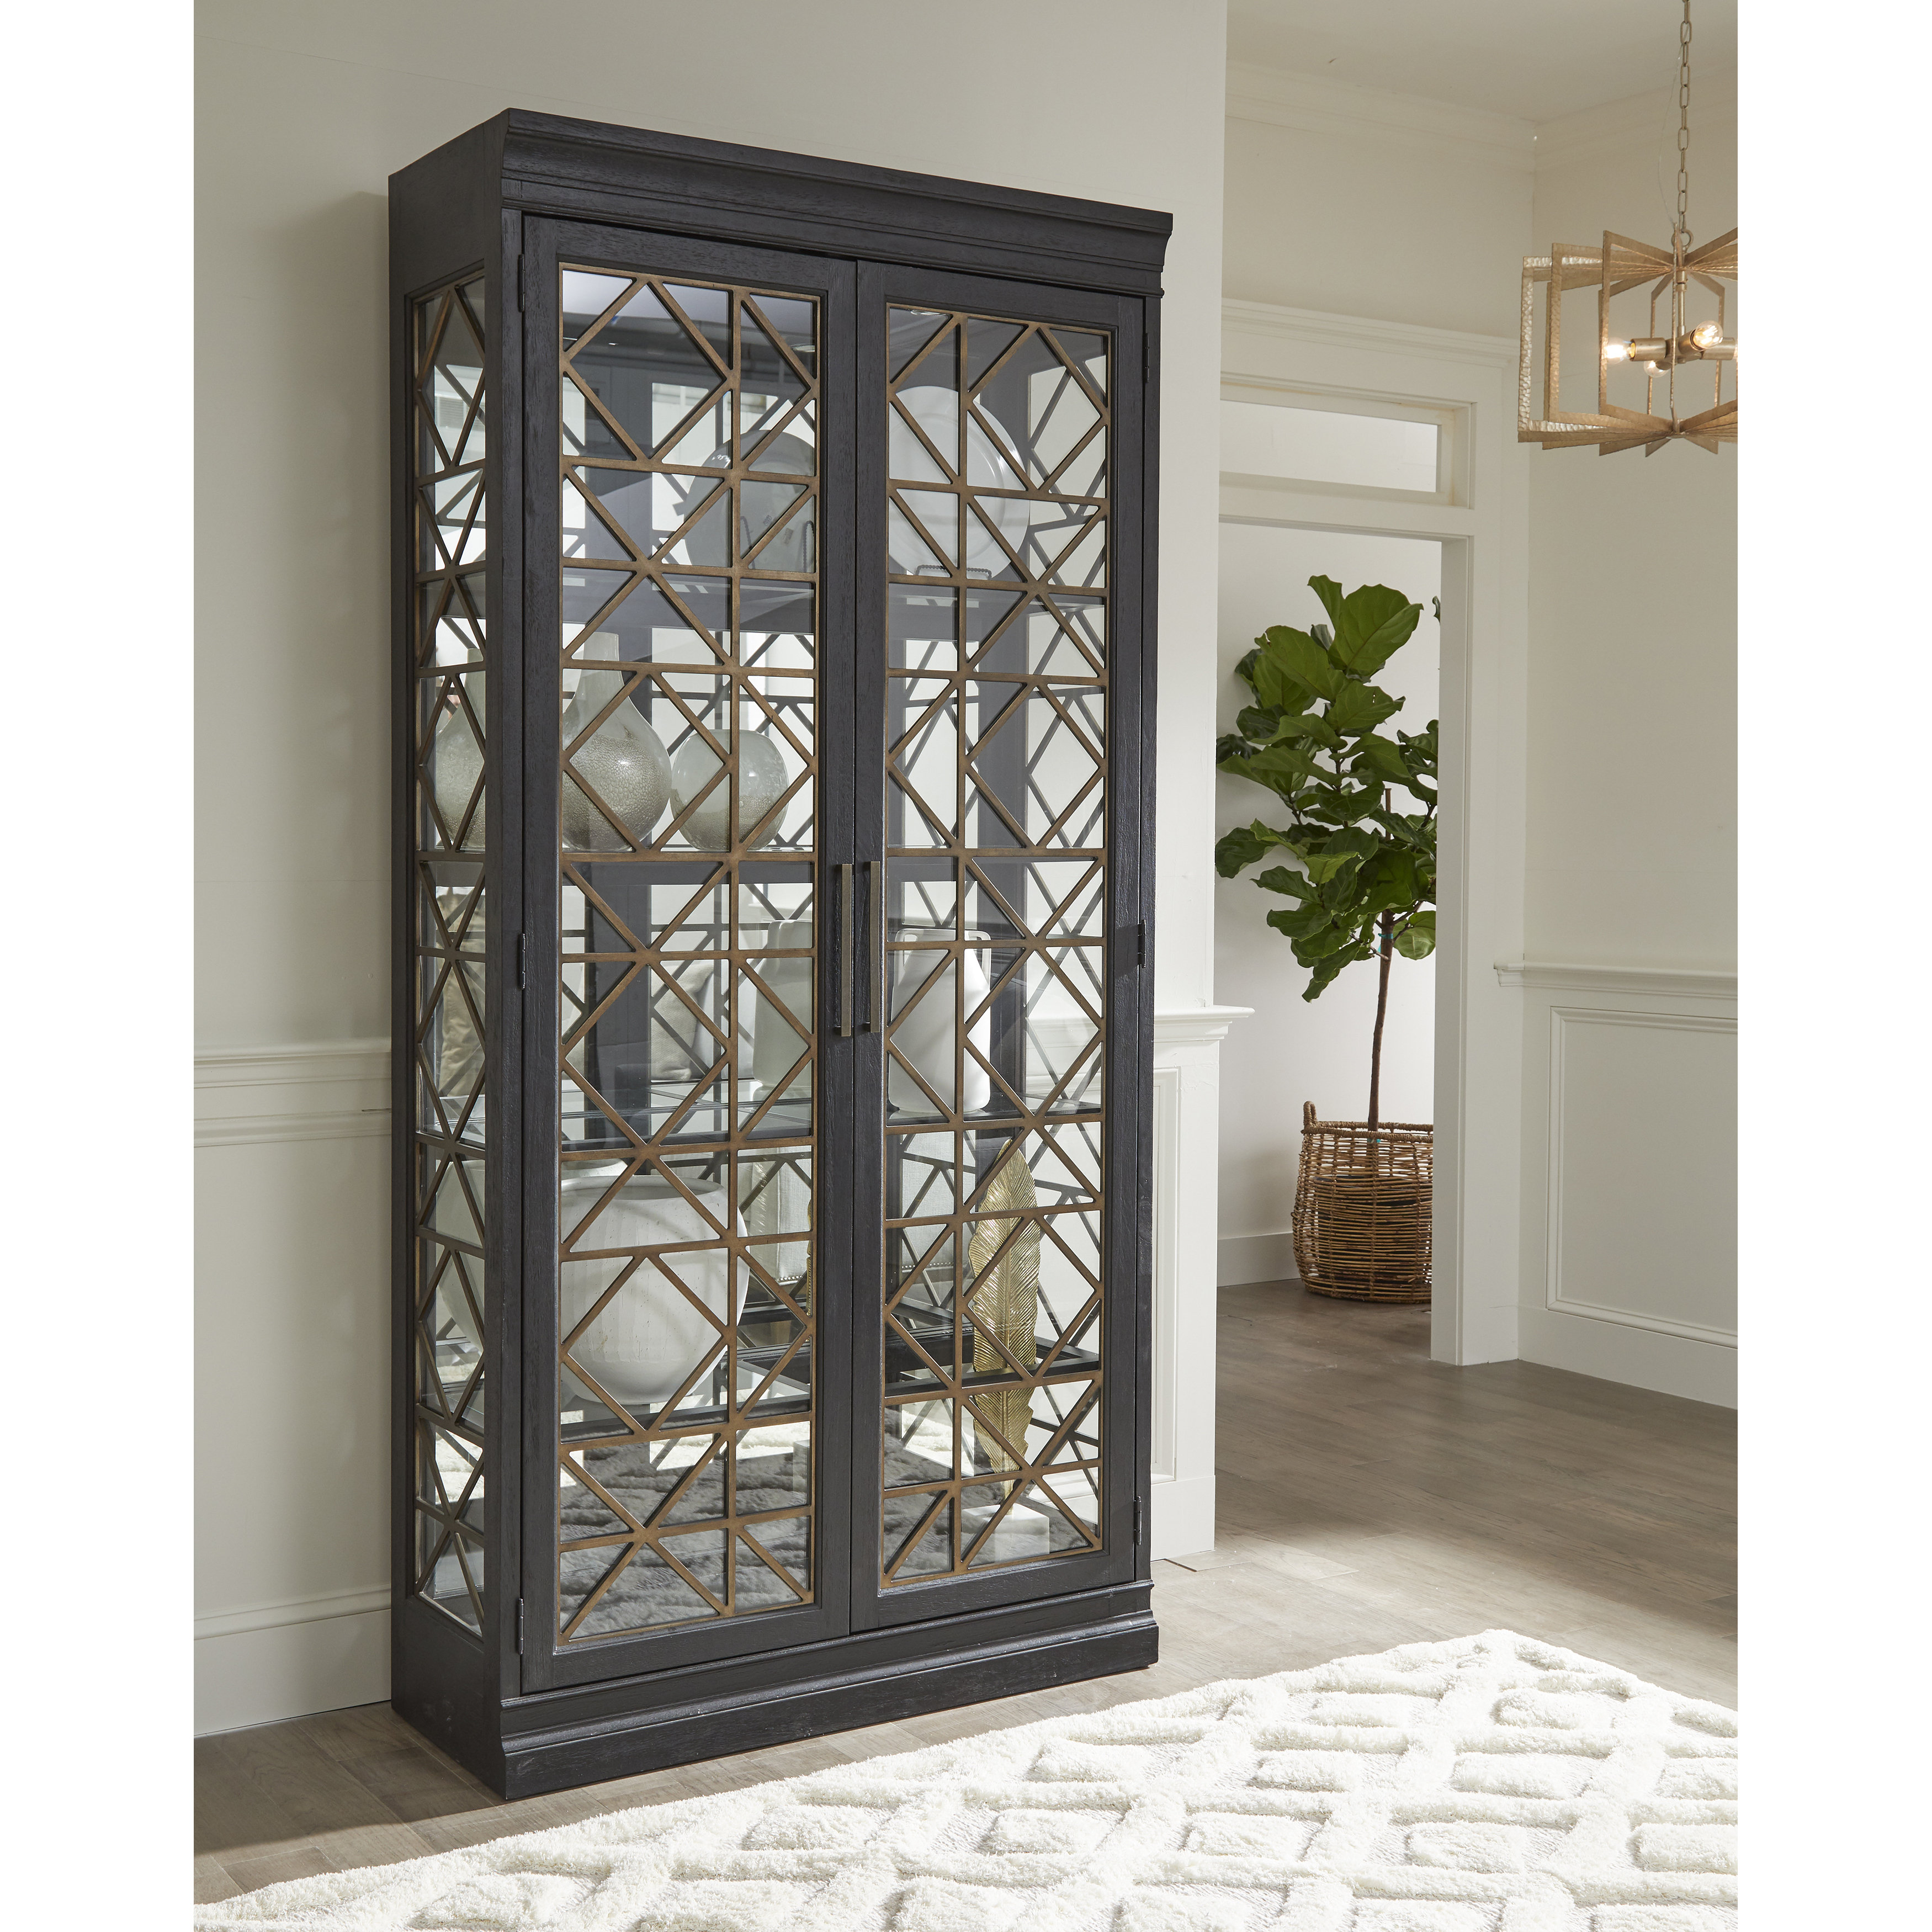 4 Shelf Display Cabinet With Decorative Glass Doors